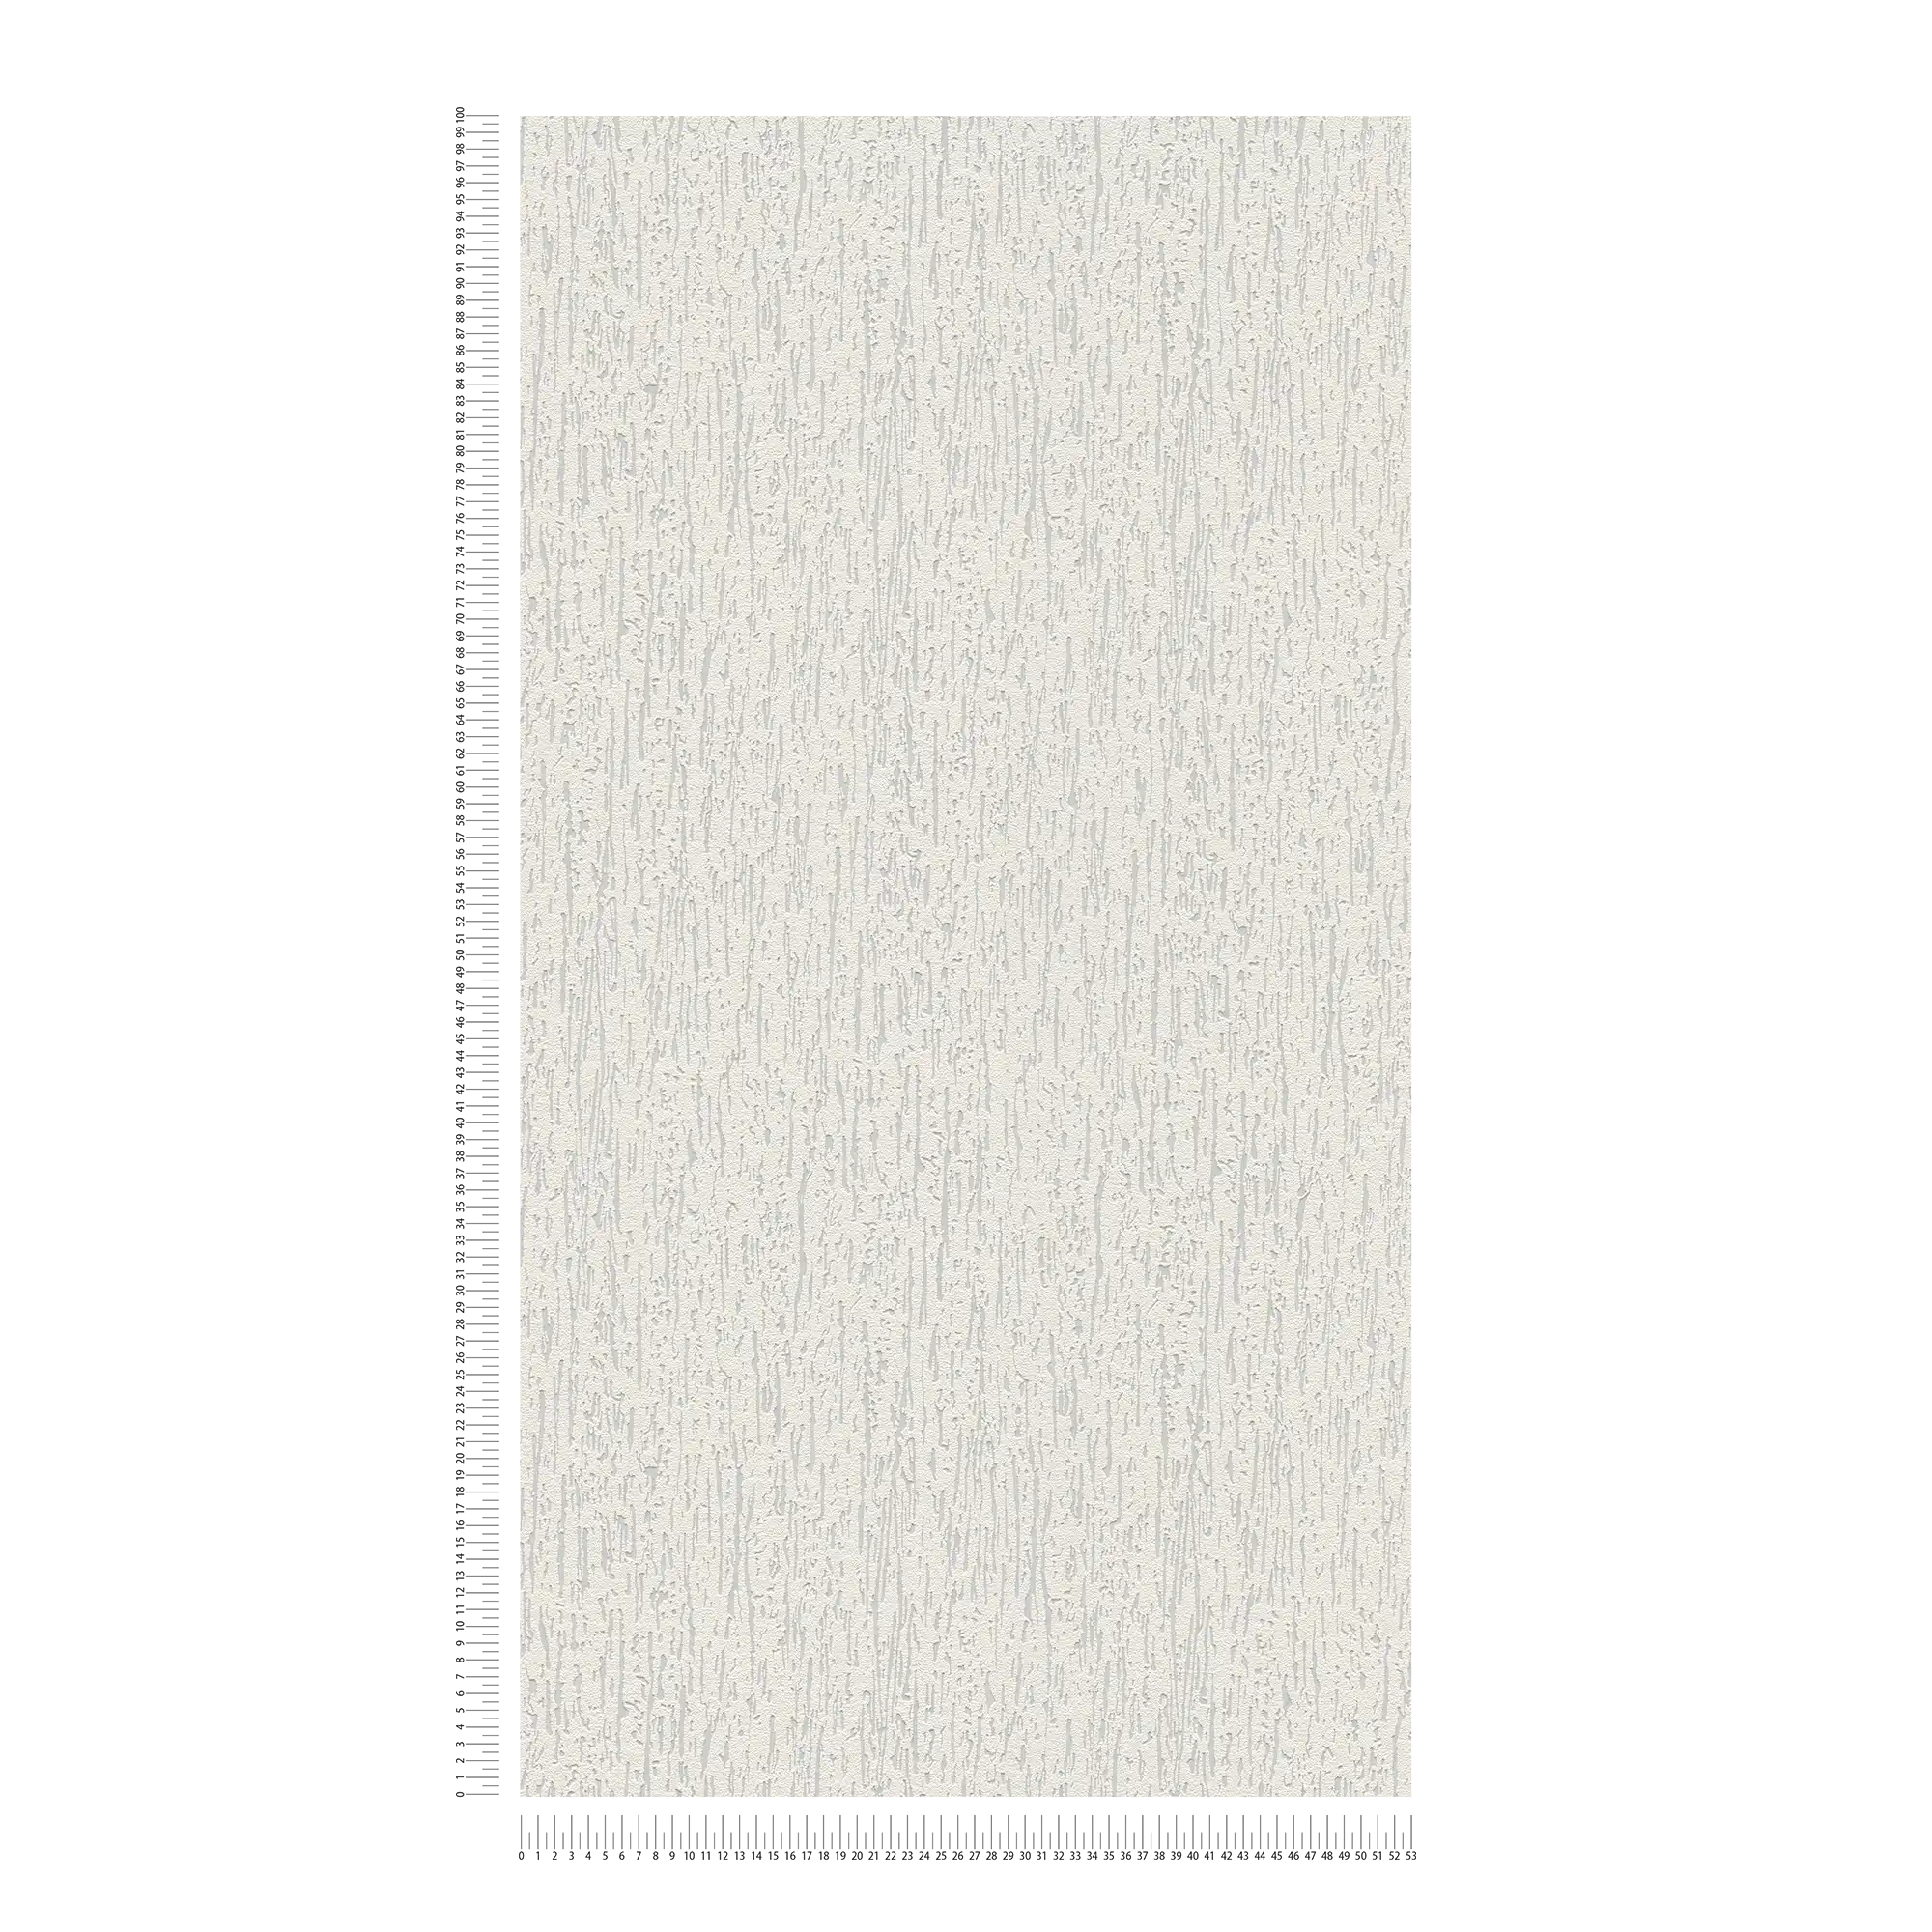             Papel pintado no tejido de aspecto rugoso - pintable, blanco
        